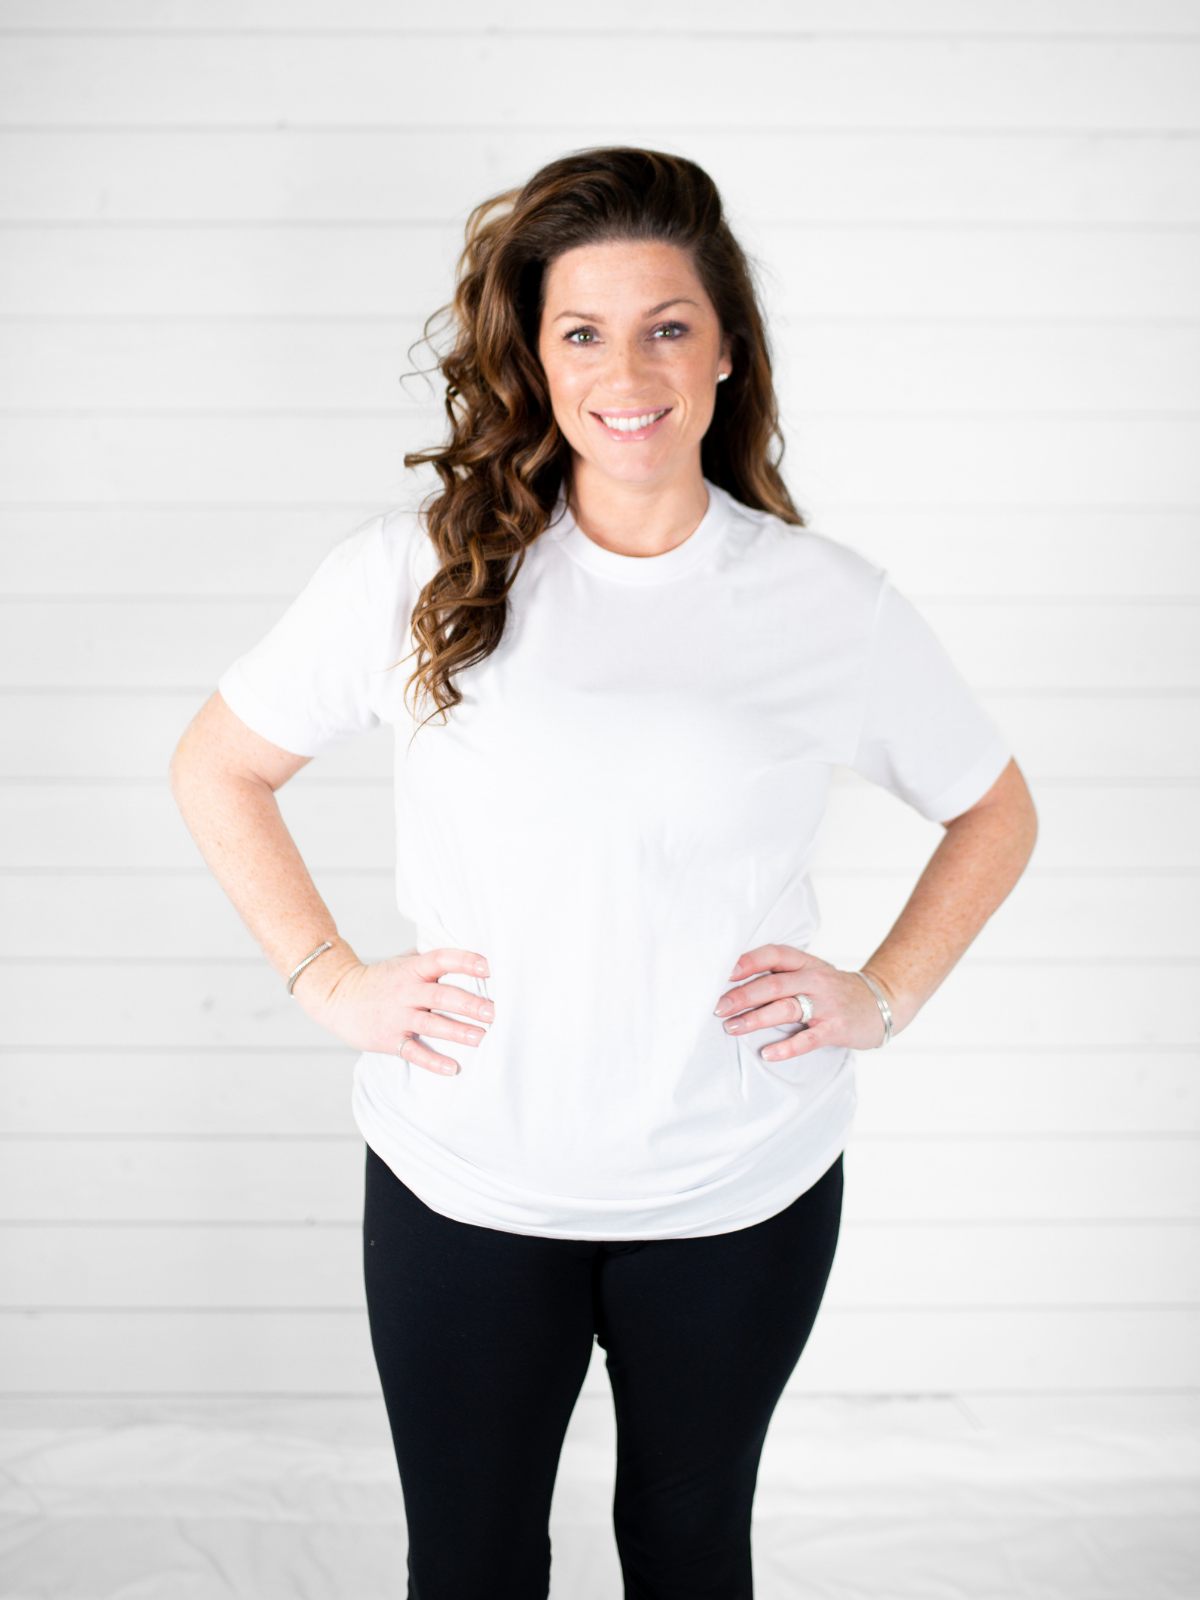 Unisex Adult Short Sleeve Shirts - ARB Blanks